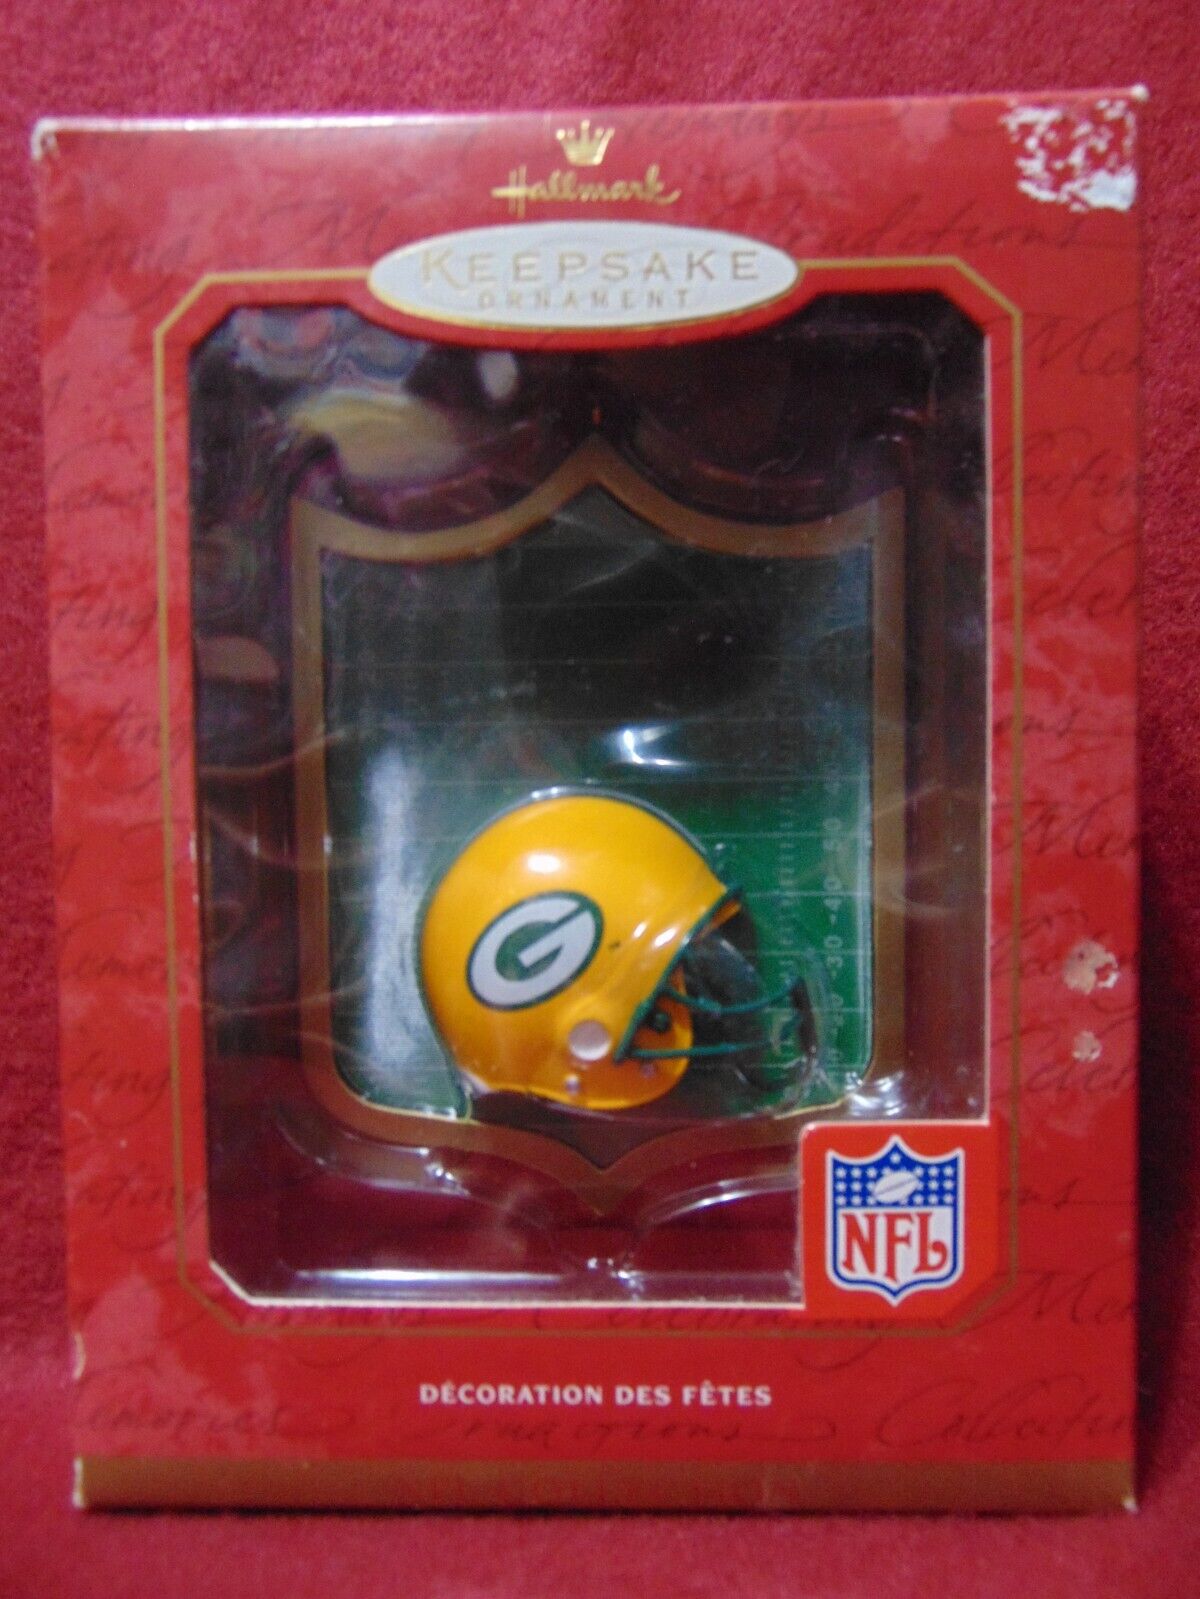 NFL Green Bay Packers Hallmark Keepsake Christmas Ornament 2001 in Box